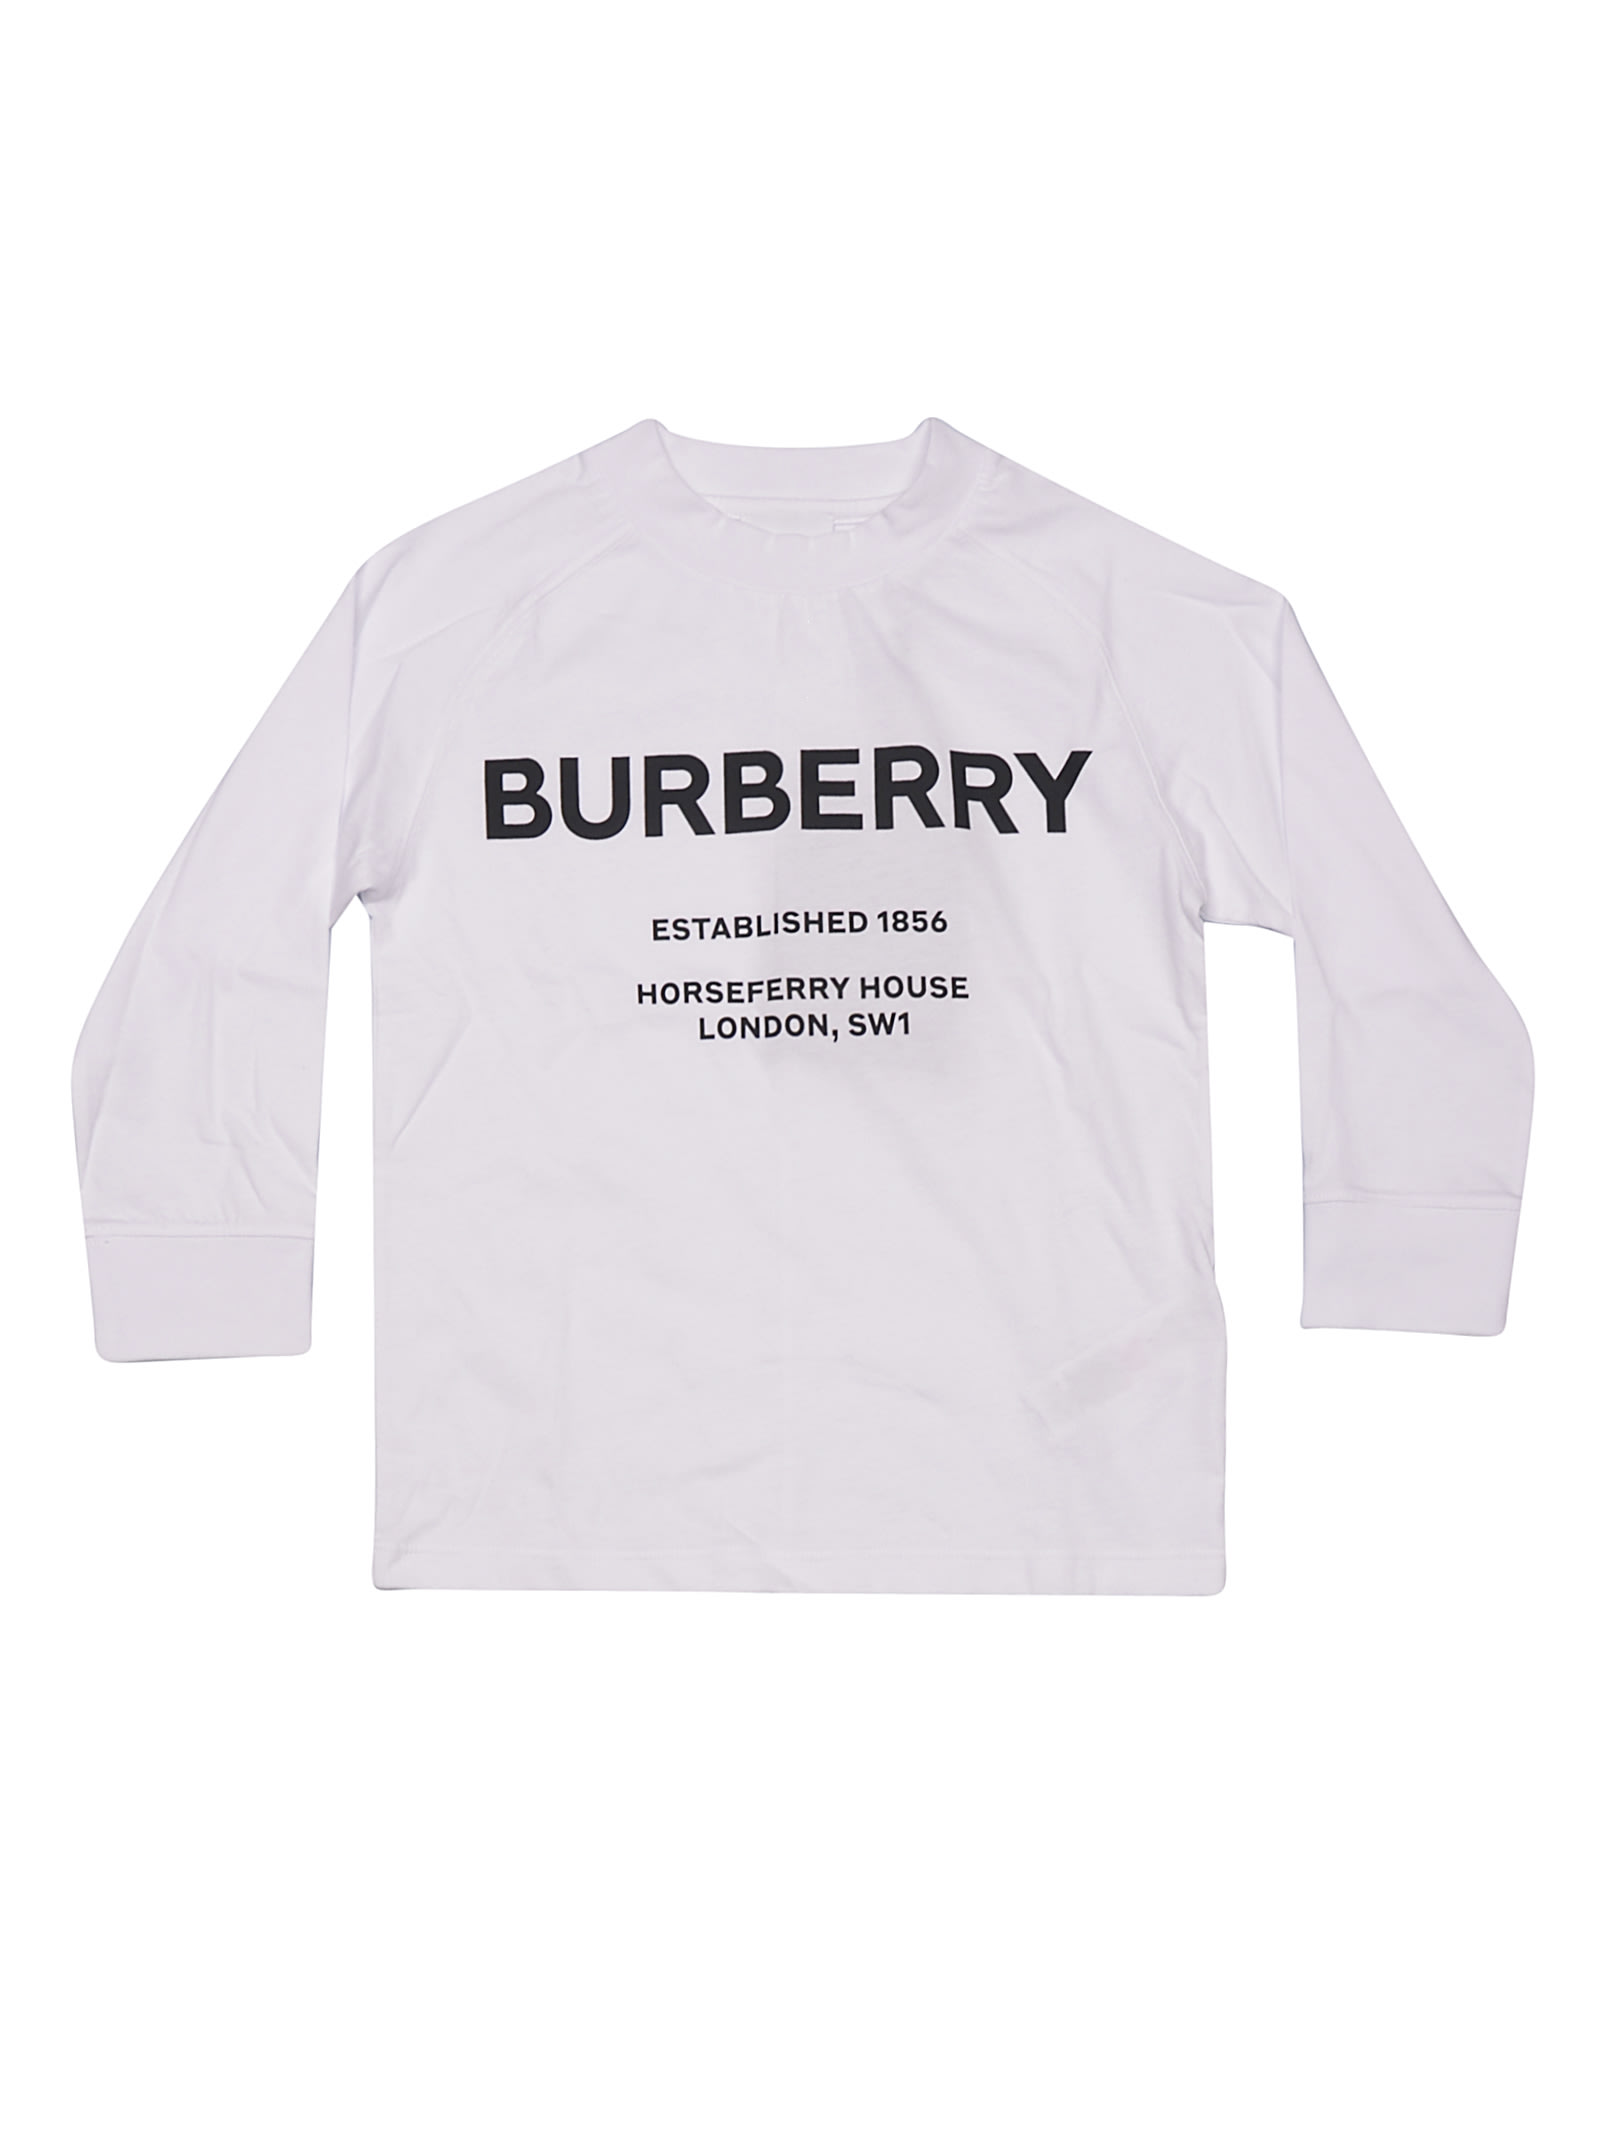 Burberry T Shirt Size Chart